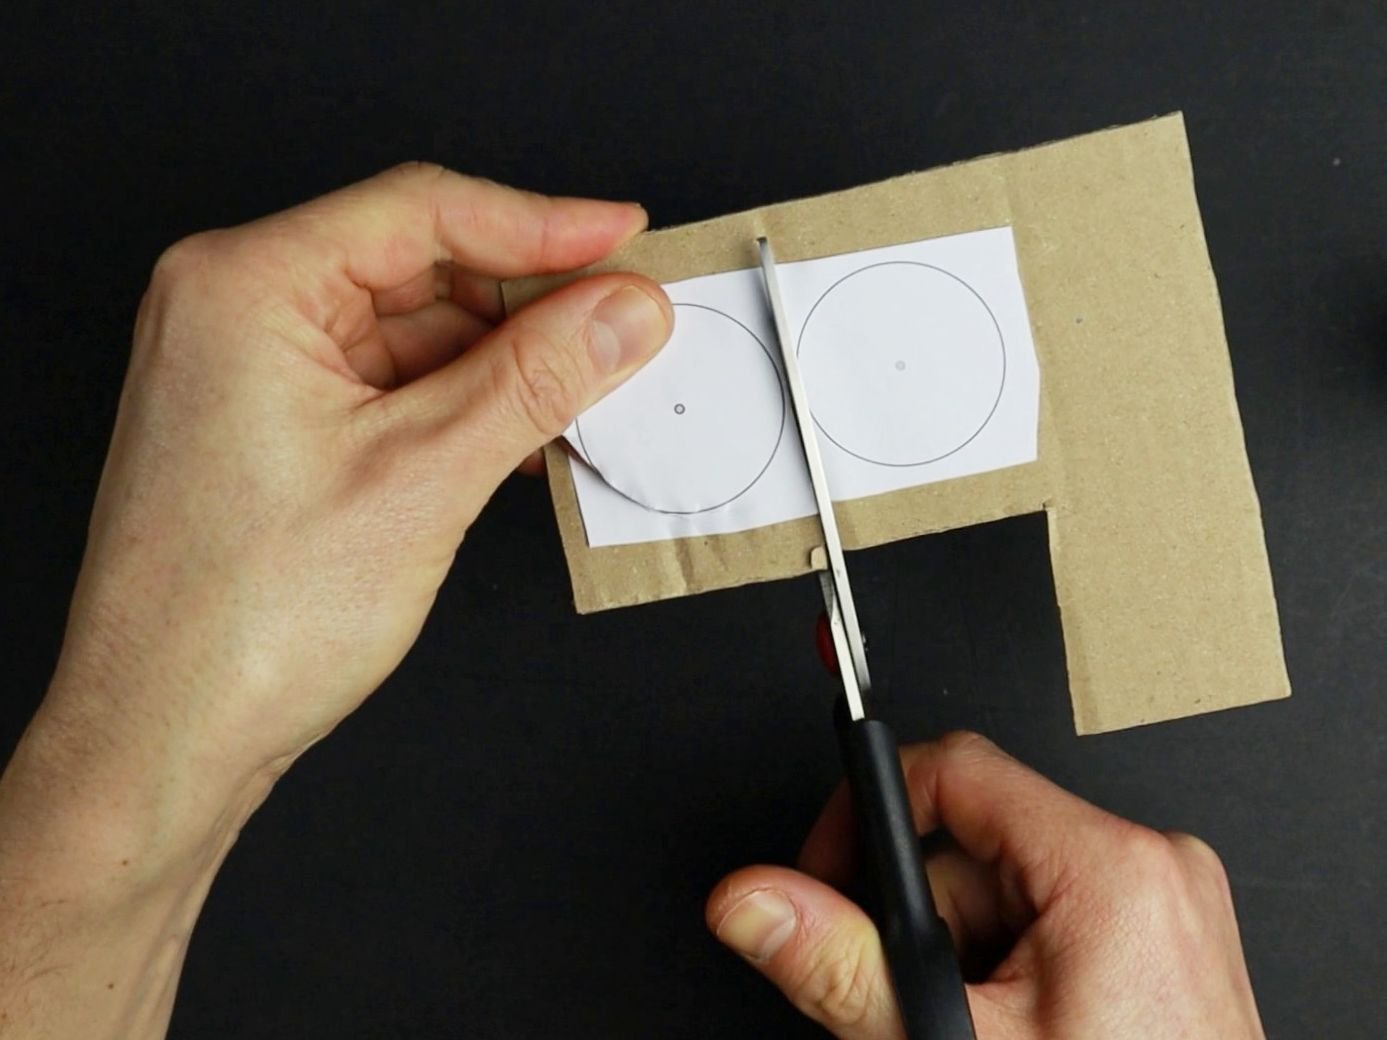 DIY Spin Art Robot for Kids — Volt, Paper, Scissors!